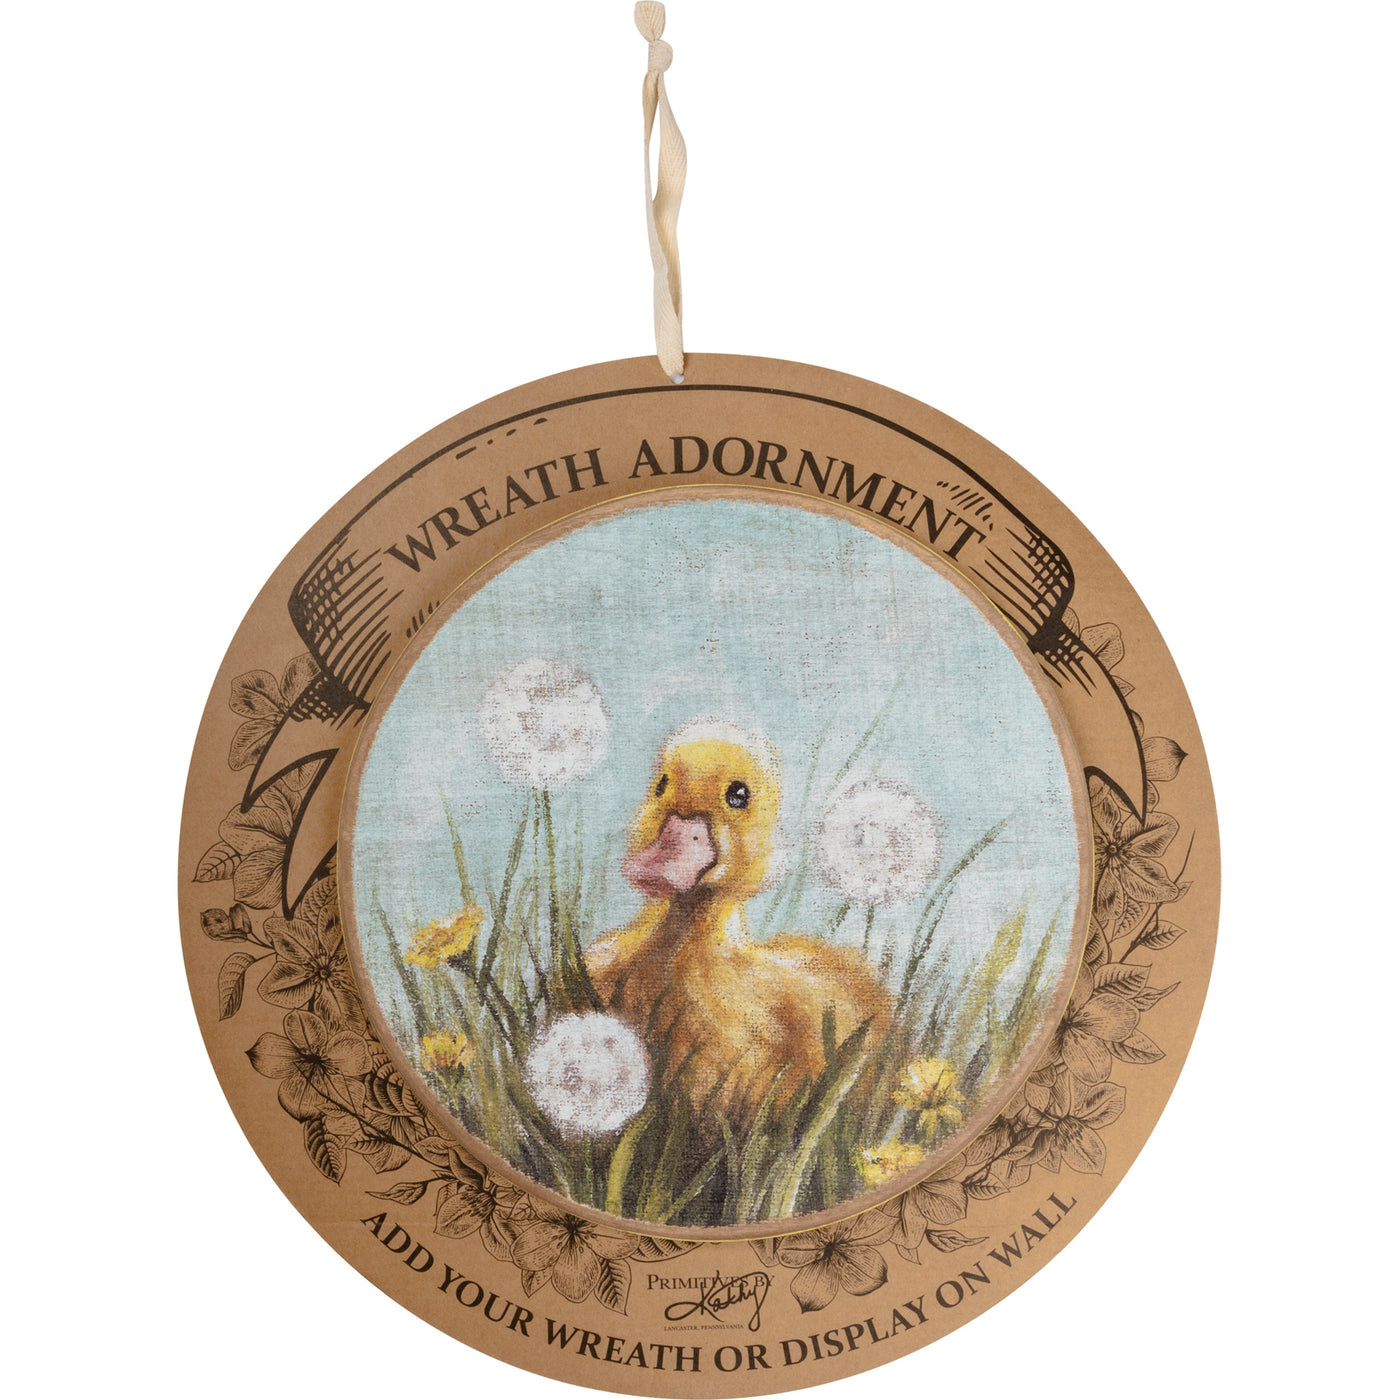 Surprise Me Sale 🤭 Duckling in the Field 10" Decorative Wreath Insert